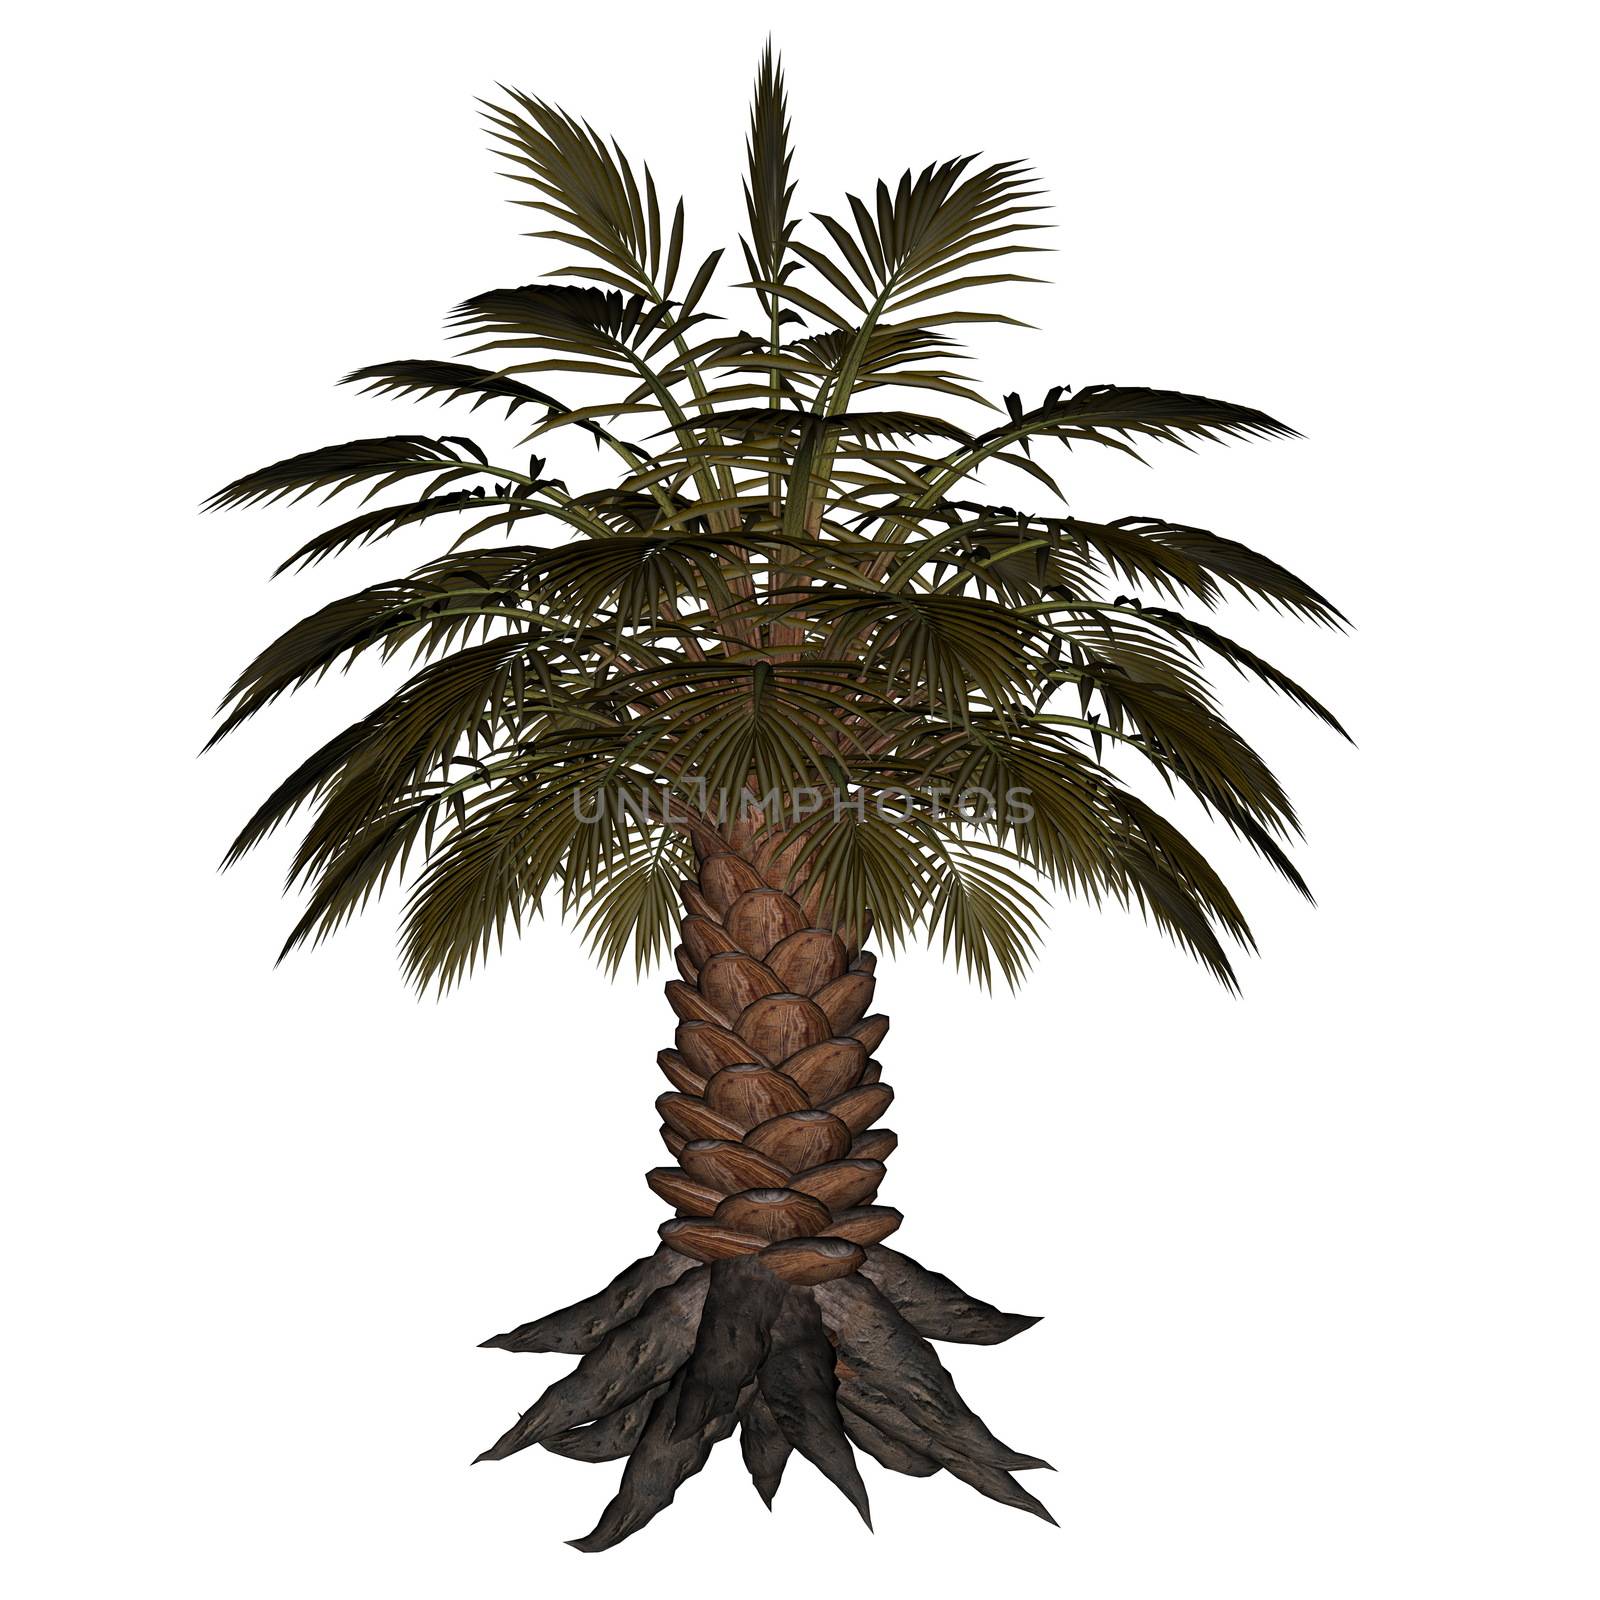 Palmtree, palm tree - 3D render by Elenaphotos21